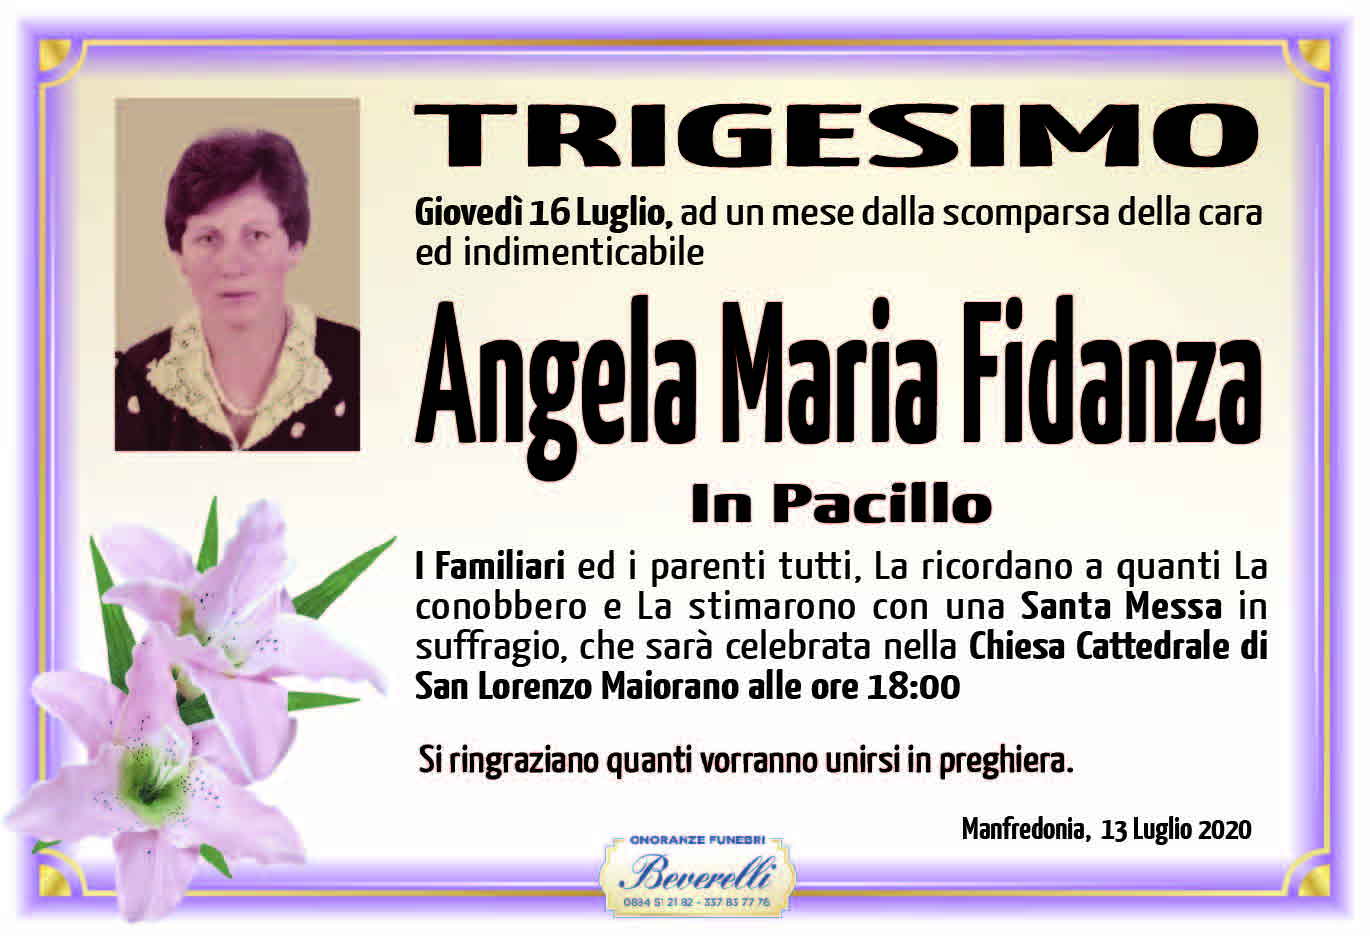 Angela Maria Fidanza